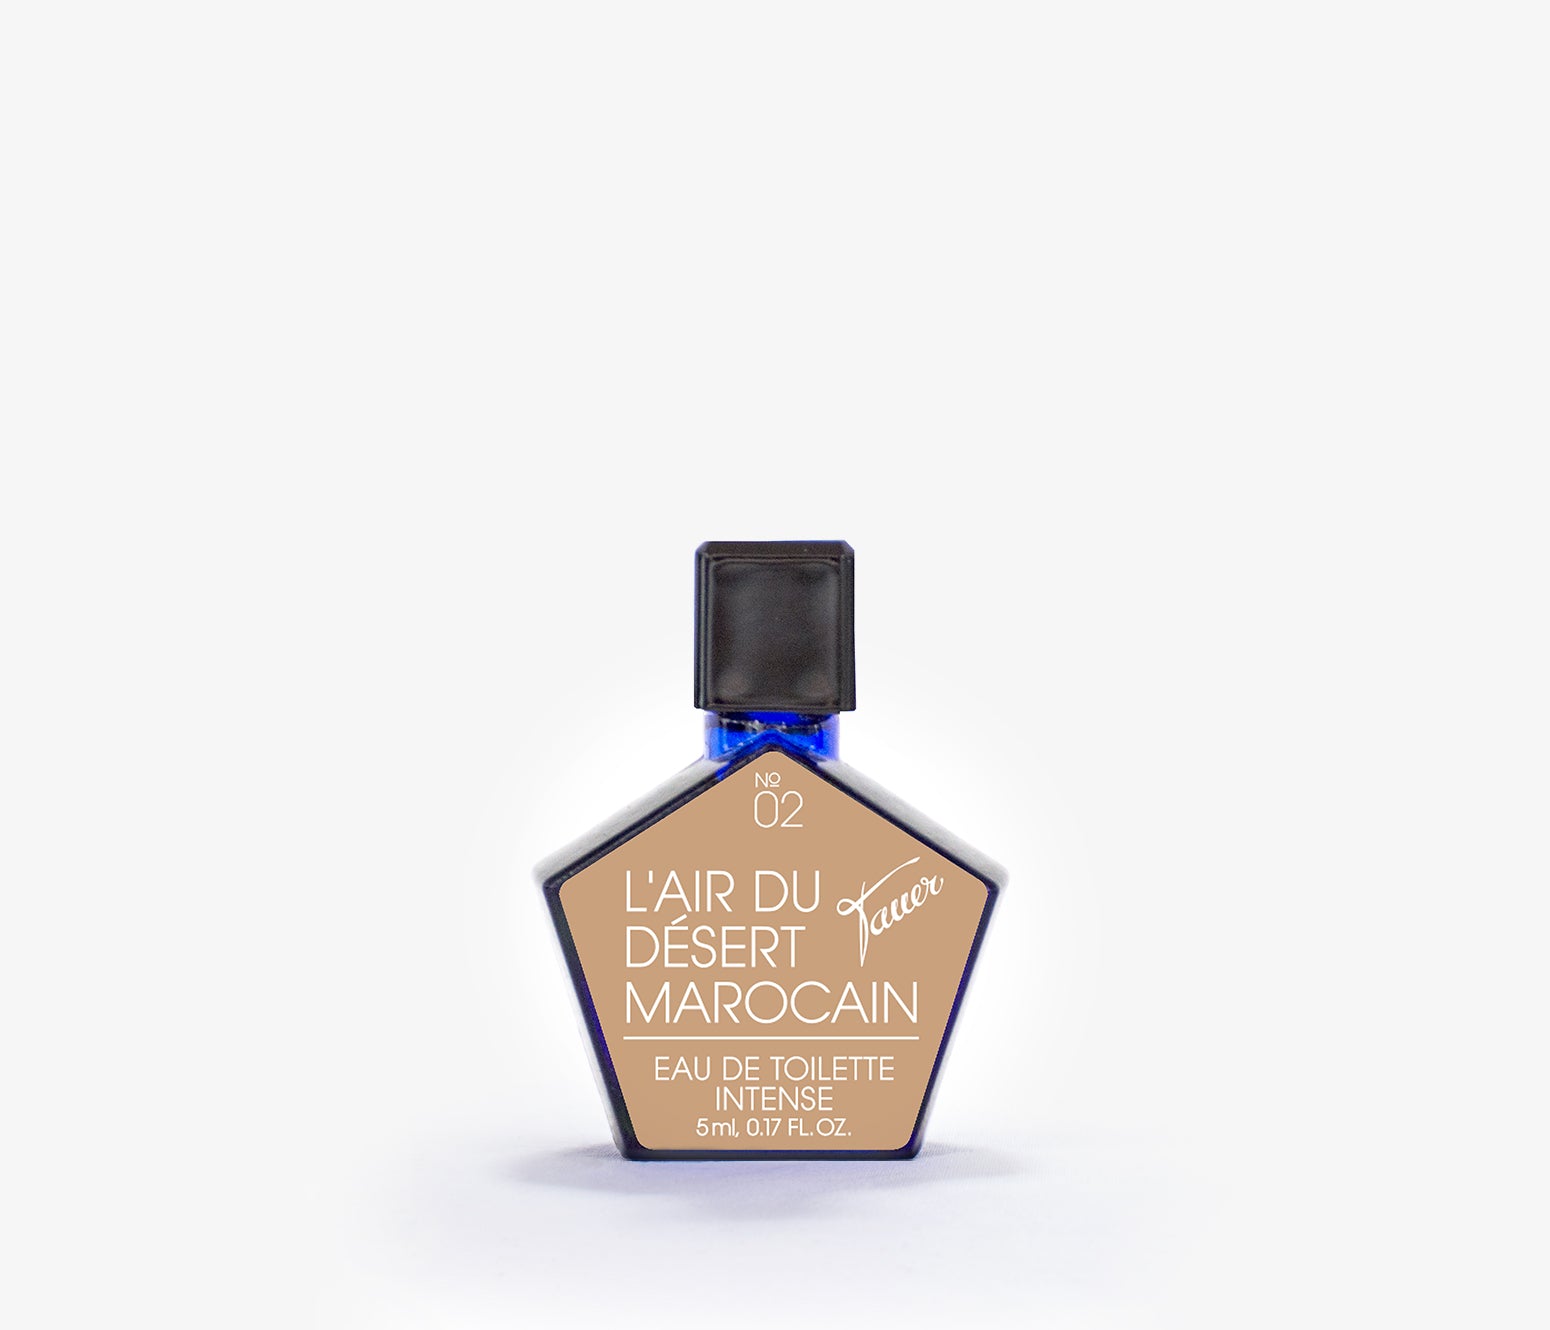 Tauer Perfumes - L'Air Du Desert Marocain - 5ml - WSJ001 - Product Image - Fragrance - Les Senteurs